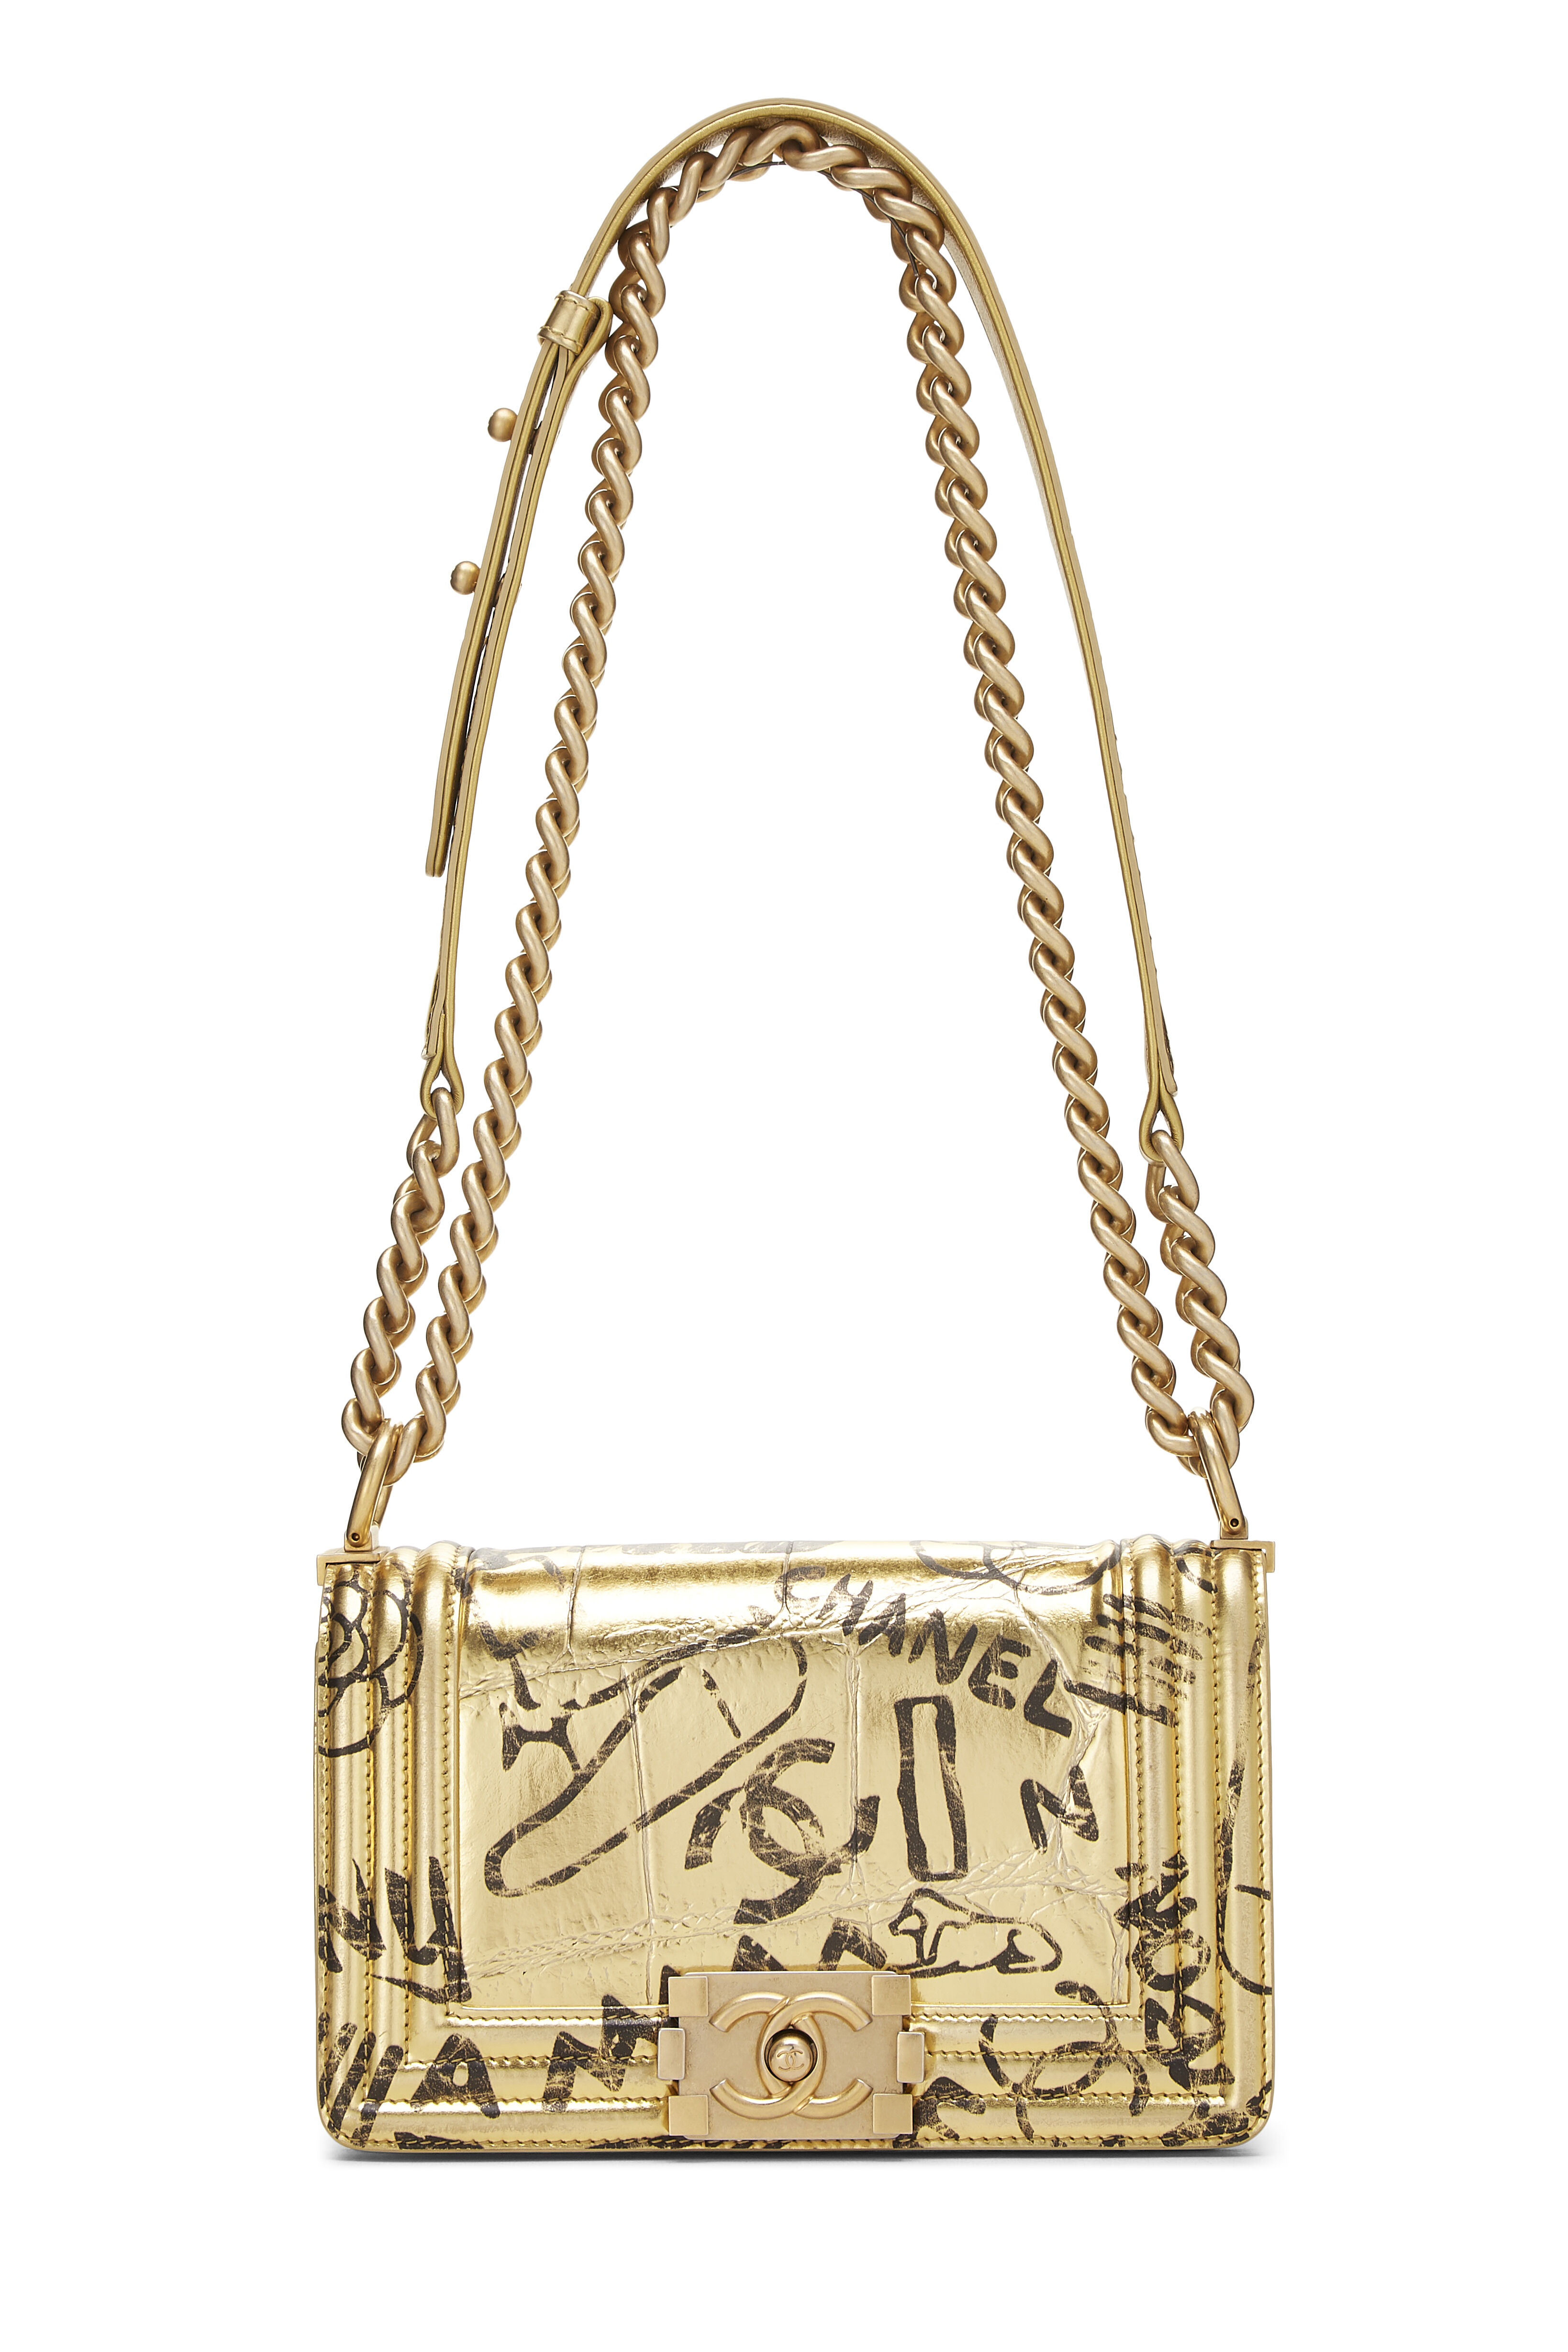 Chanel - Paris-New York Gold Embossed Graffiti Boy Bag Small